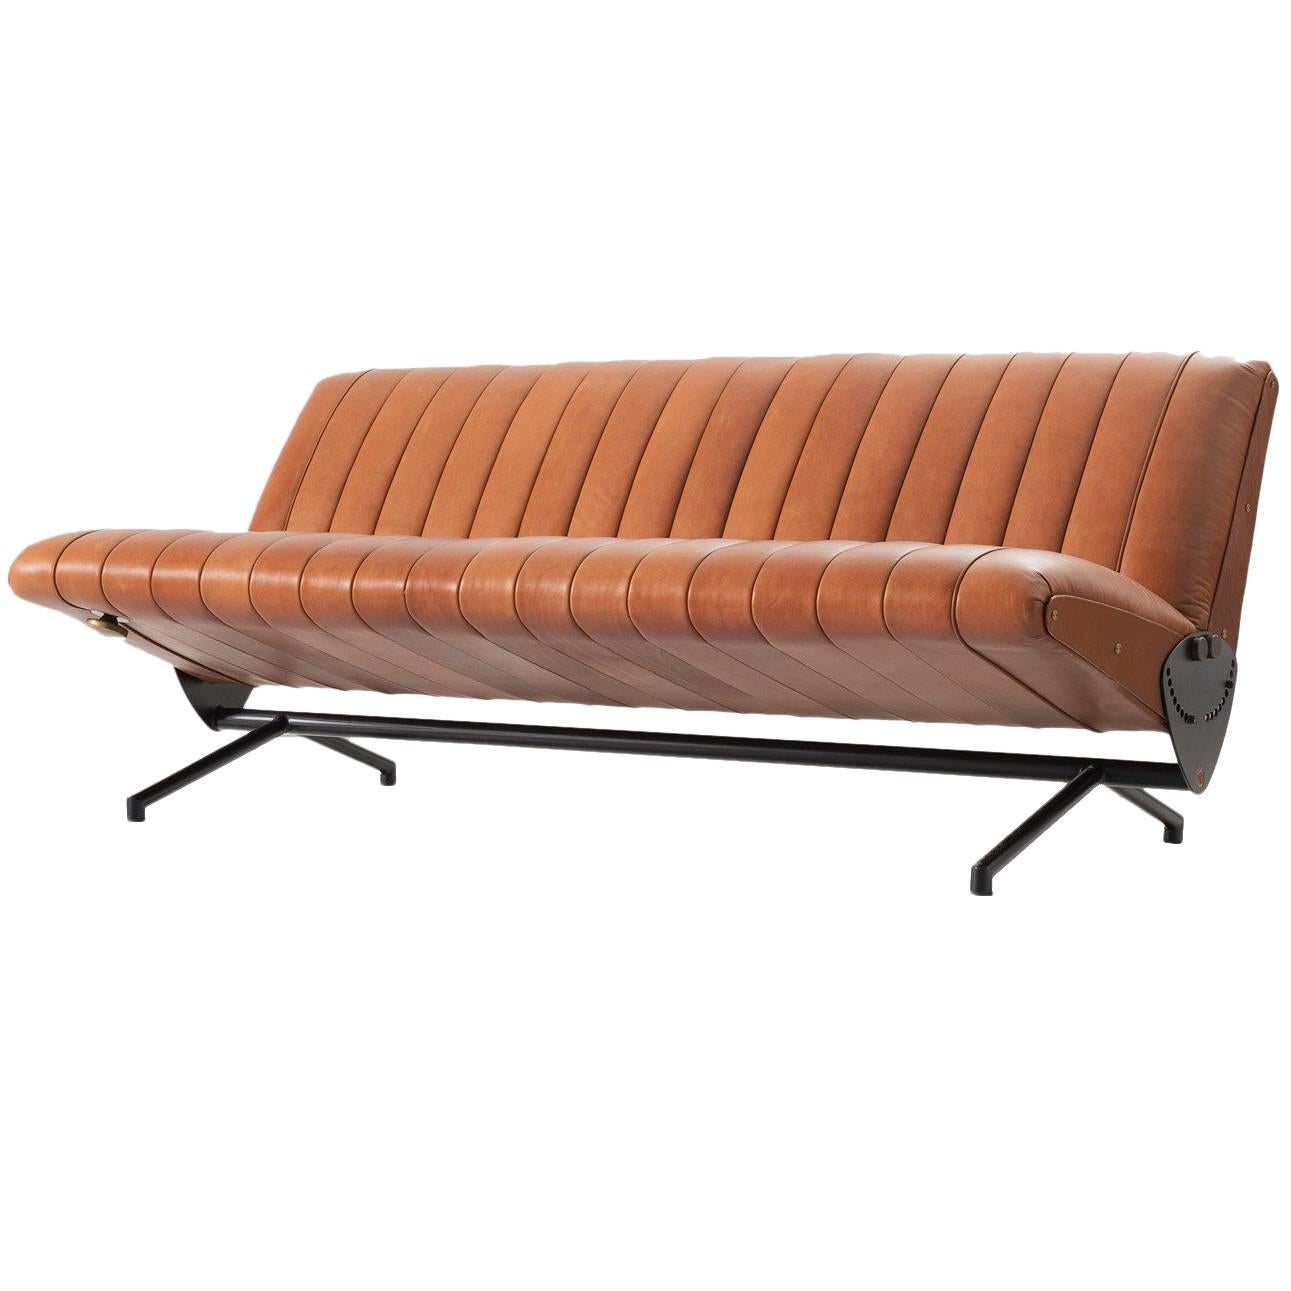 Reupholstered Osvaldo Borsani D70 Sofa in Warm Cognac Aniline Leather